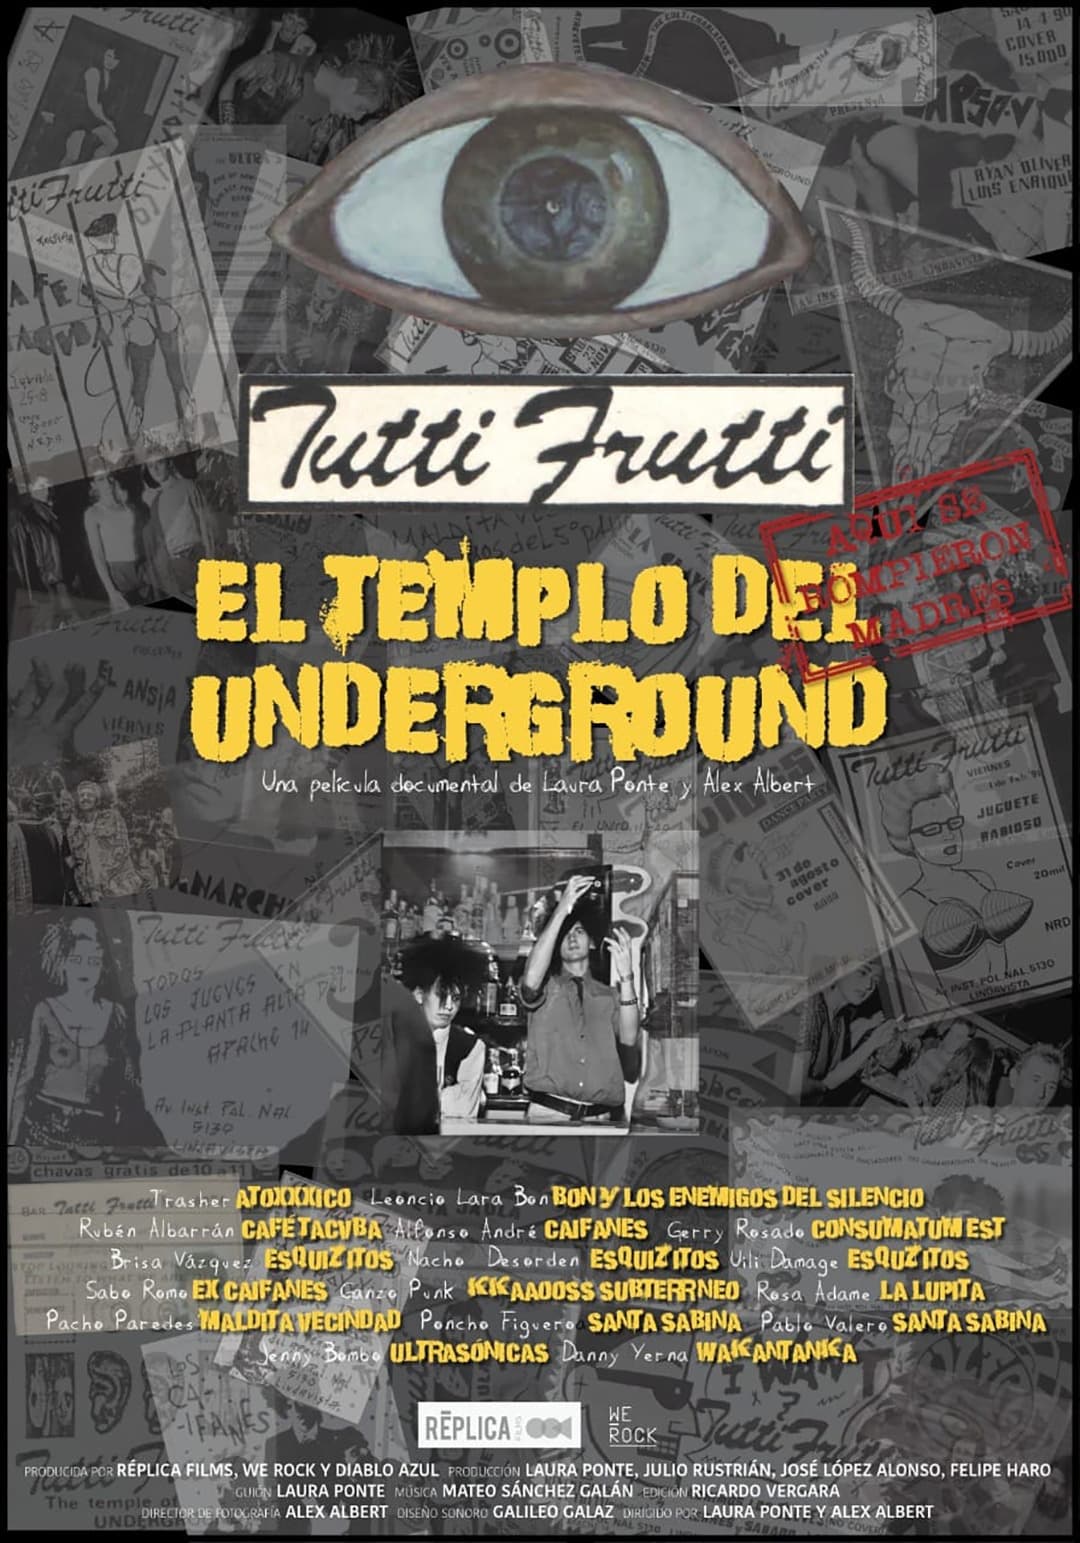 Tutti Frutti: The temple of underground